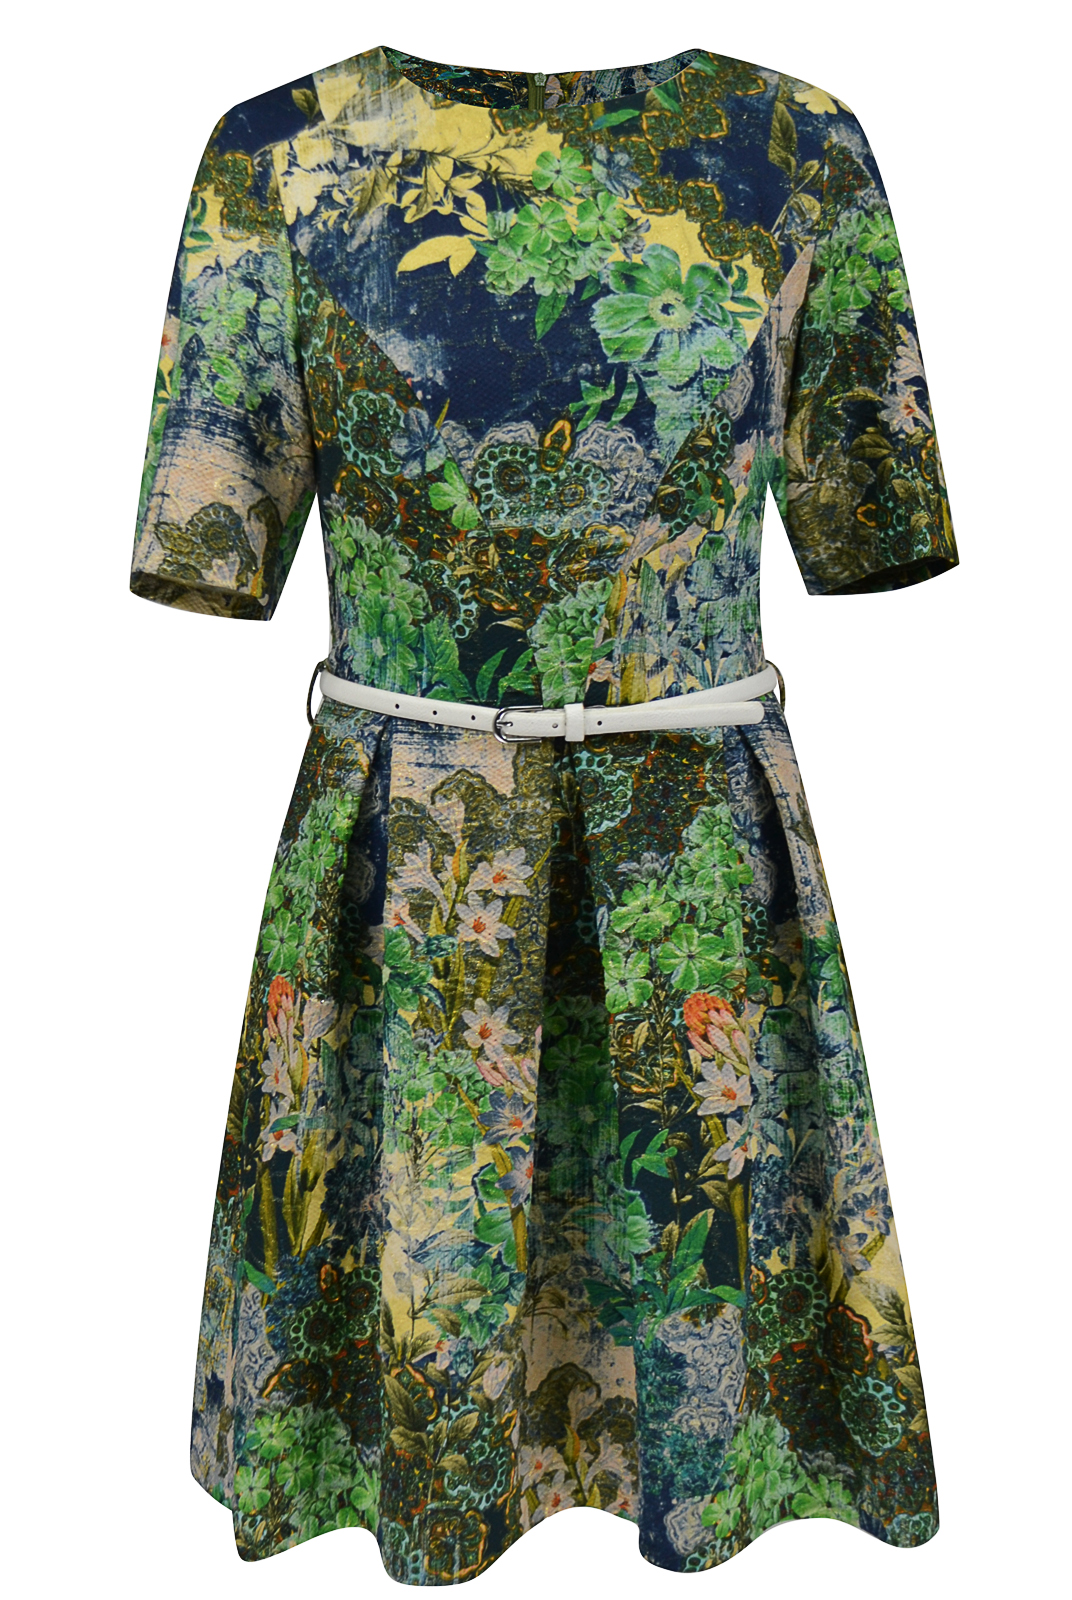 Платье женское Mila Bezgerts 1185АН зеленое 42 RU